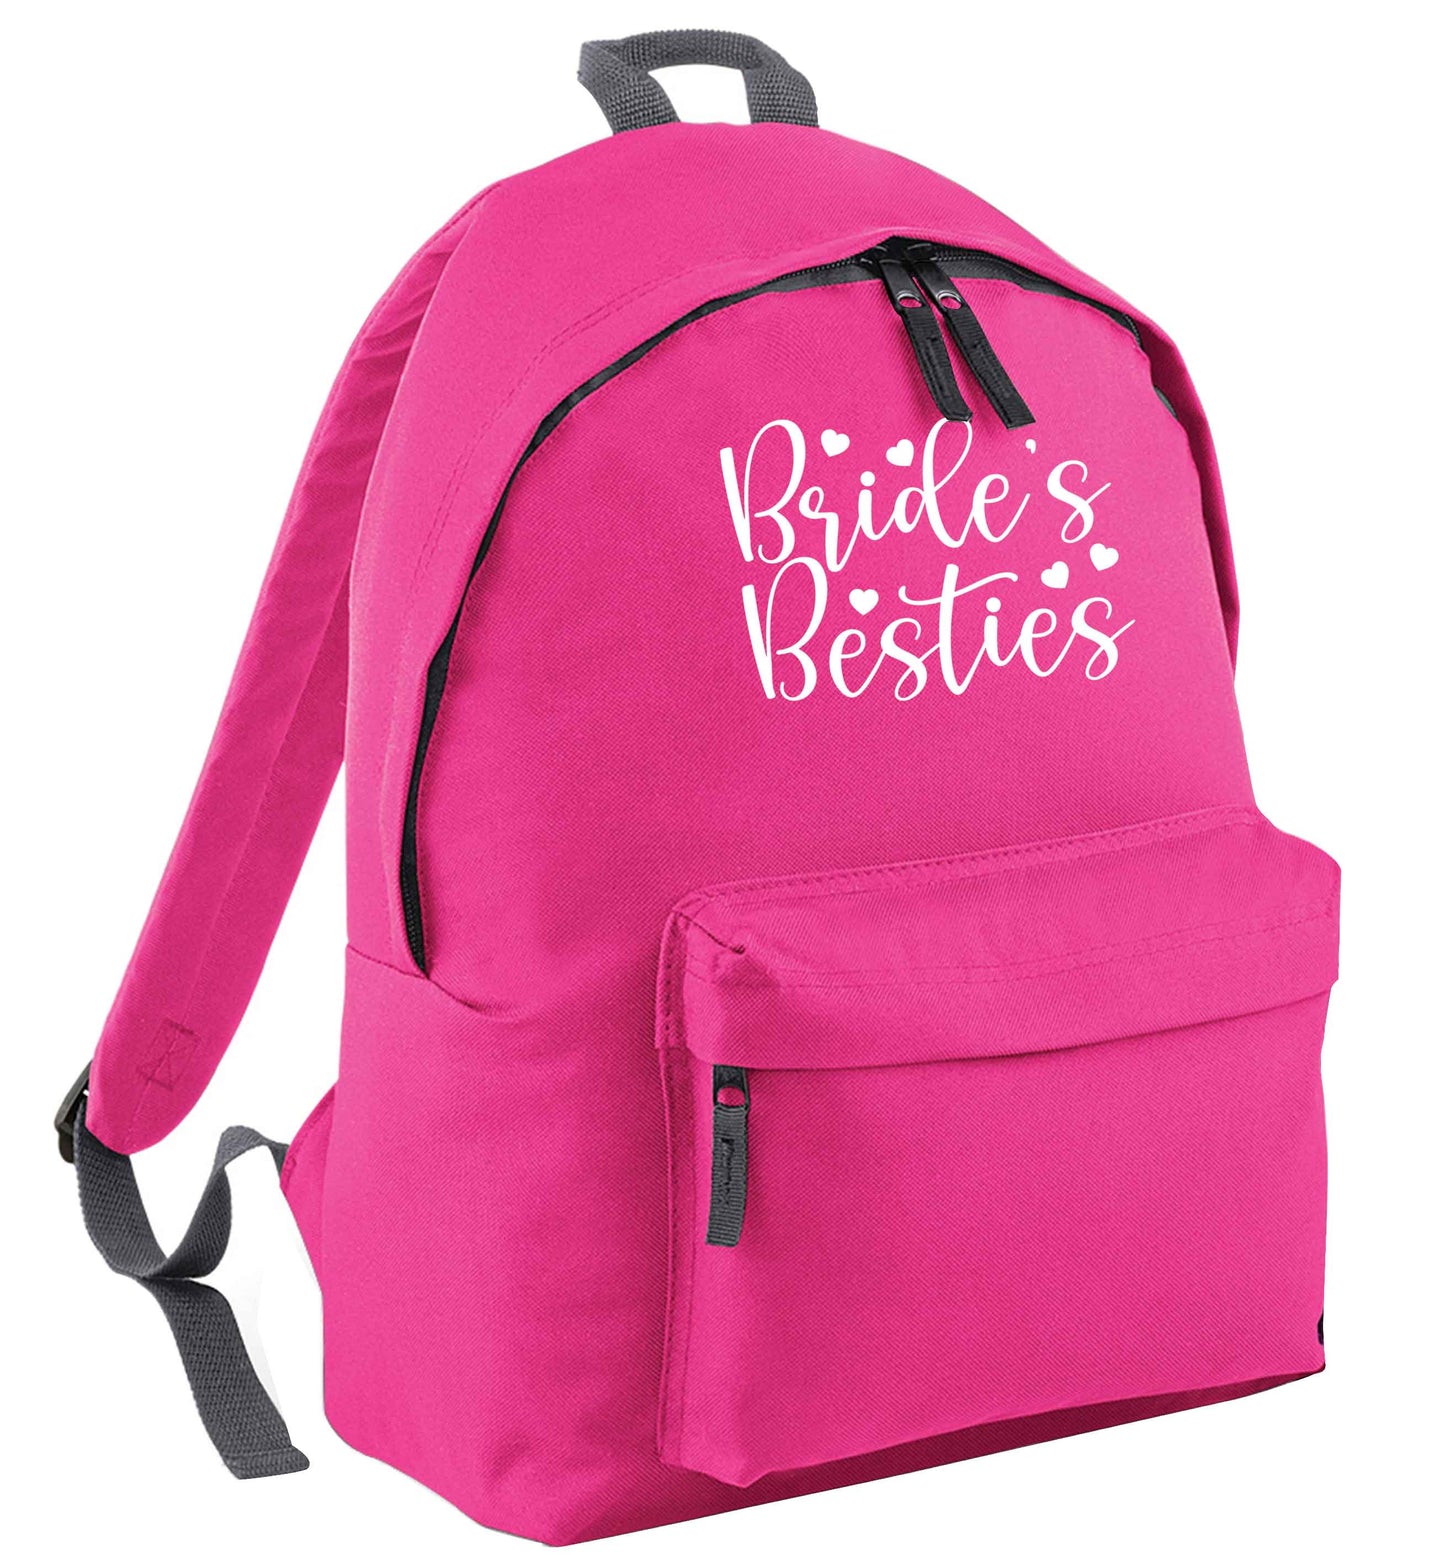 Brides besties pink adults backpack